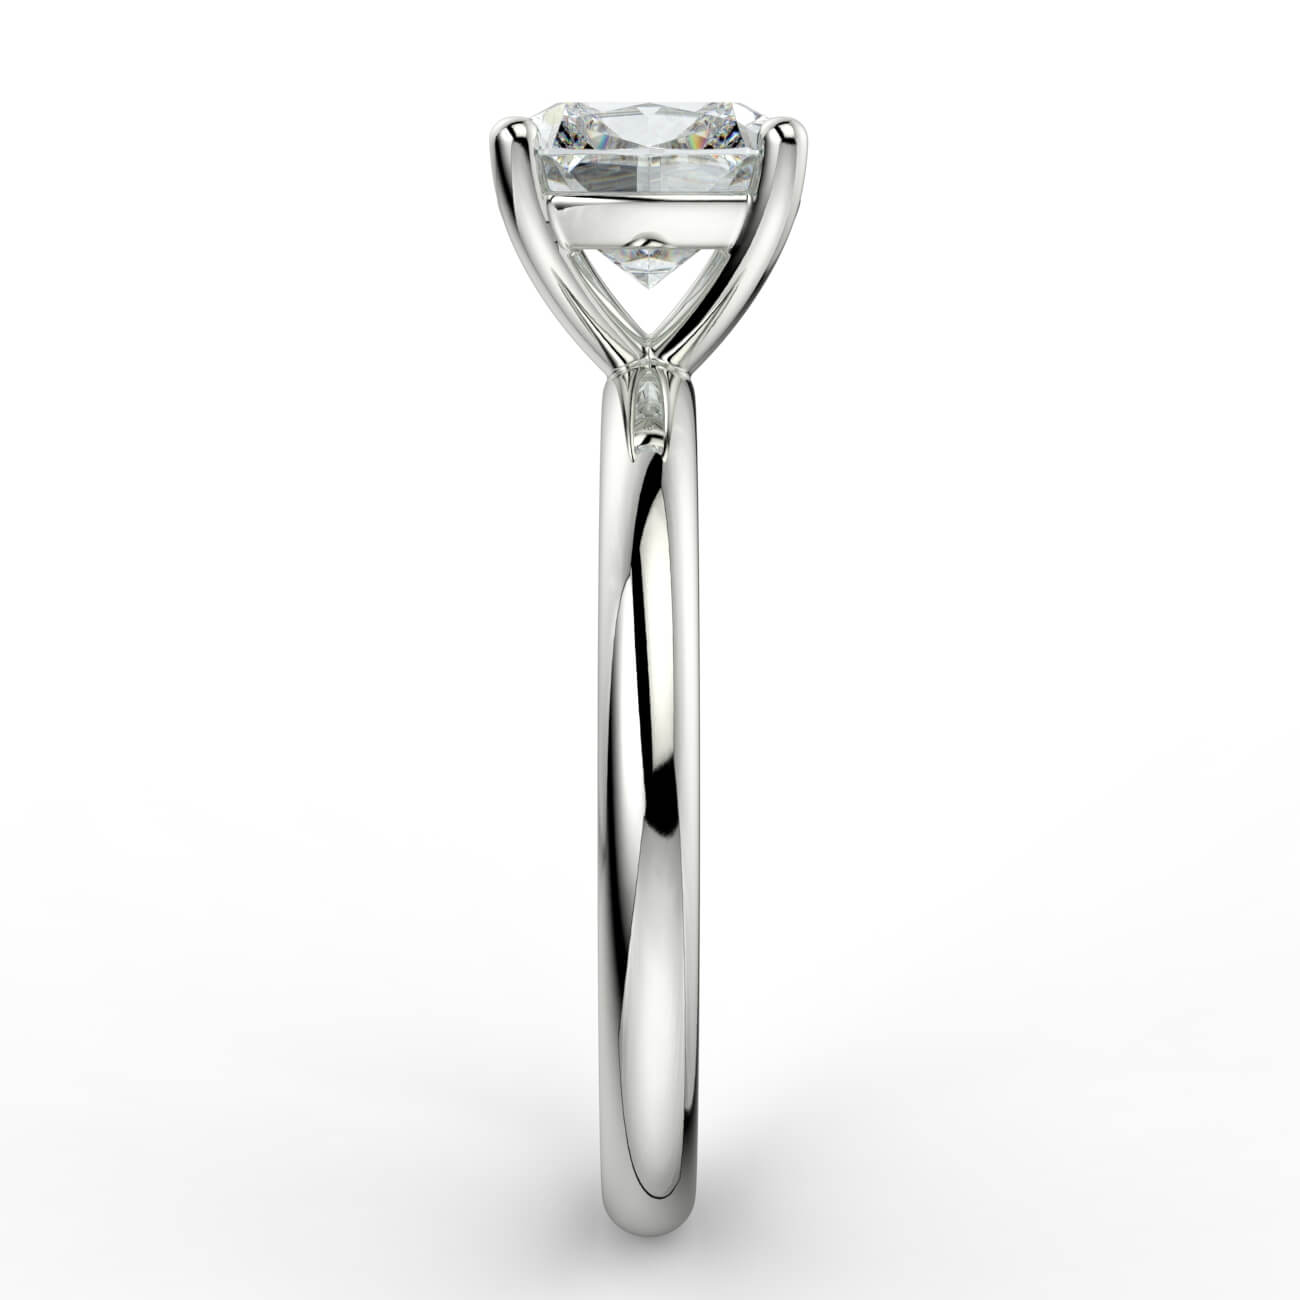 Solitaire cushion cut diamond engagement ring in white gold – Australian Diamond Network